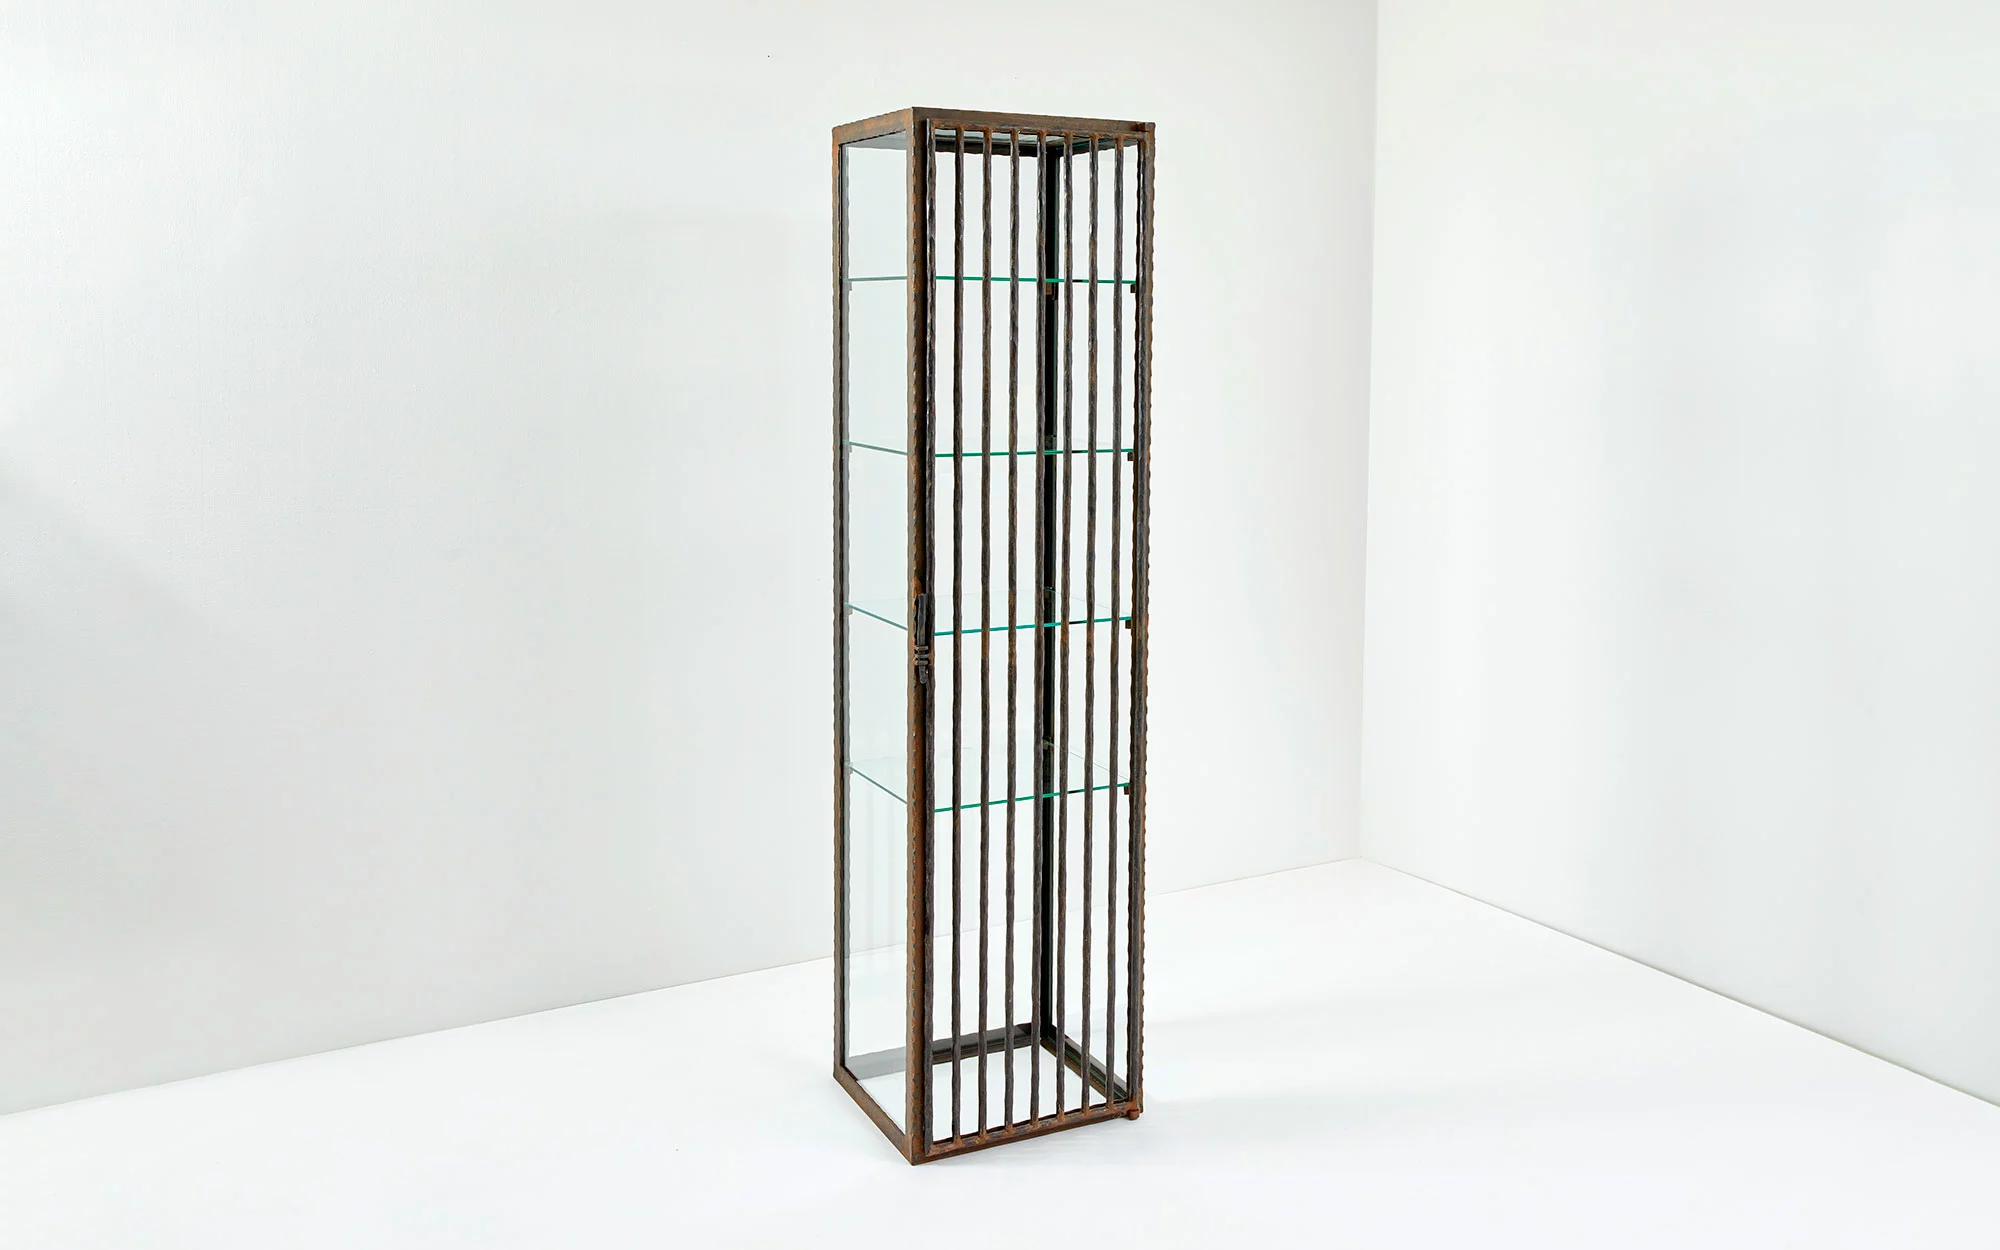 Cage haute - Elisabeth Garouste & Mattia Bonetti - Mirror - Galerie kreo